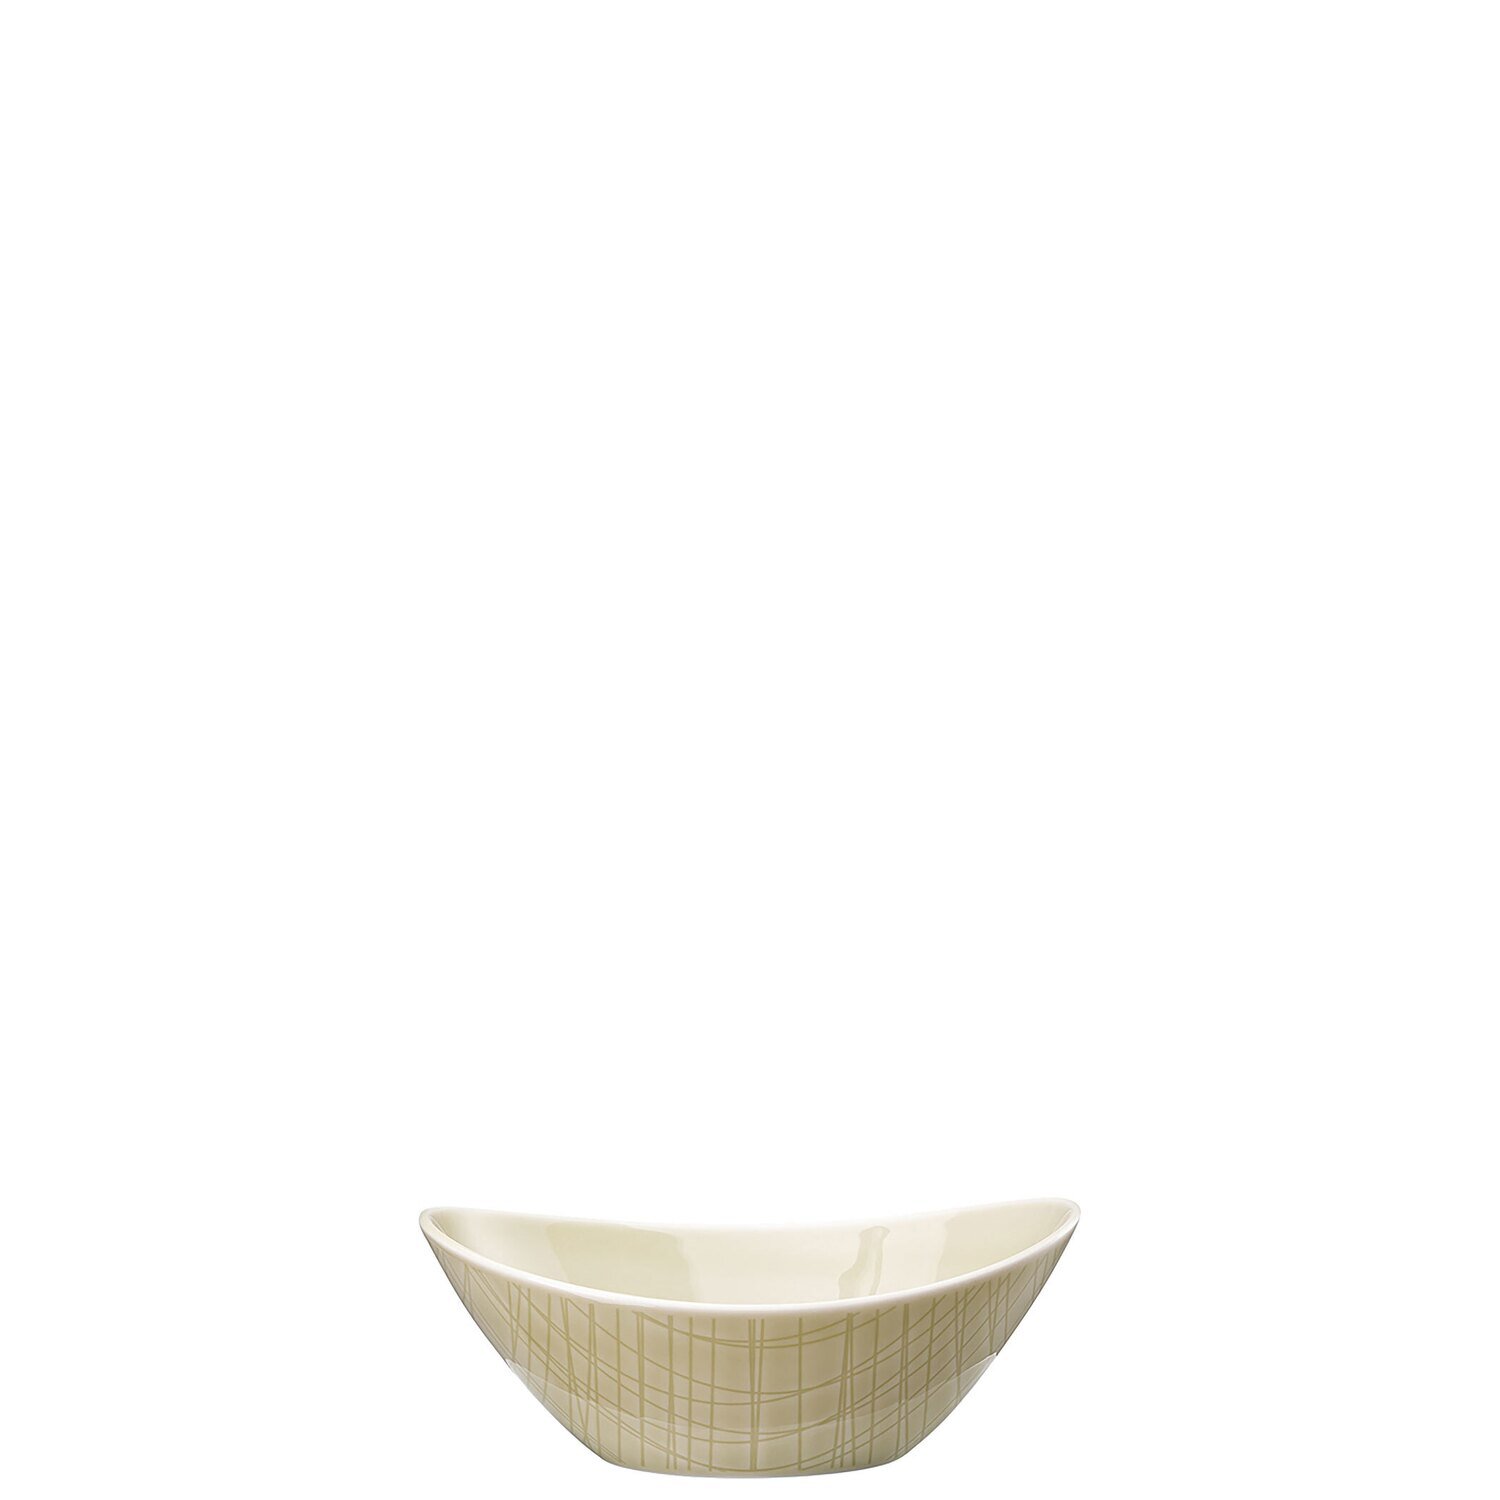 Rosenthal Mesh Cream Nesting Bowl Oval 6 x 4 1/3 Inch